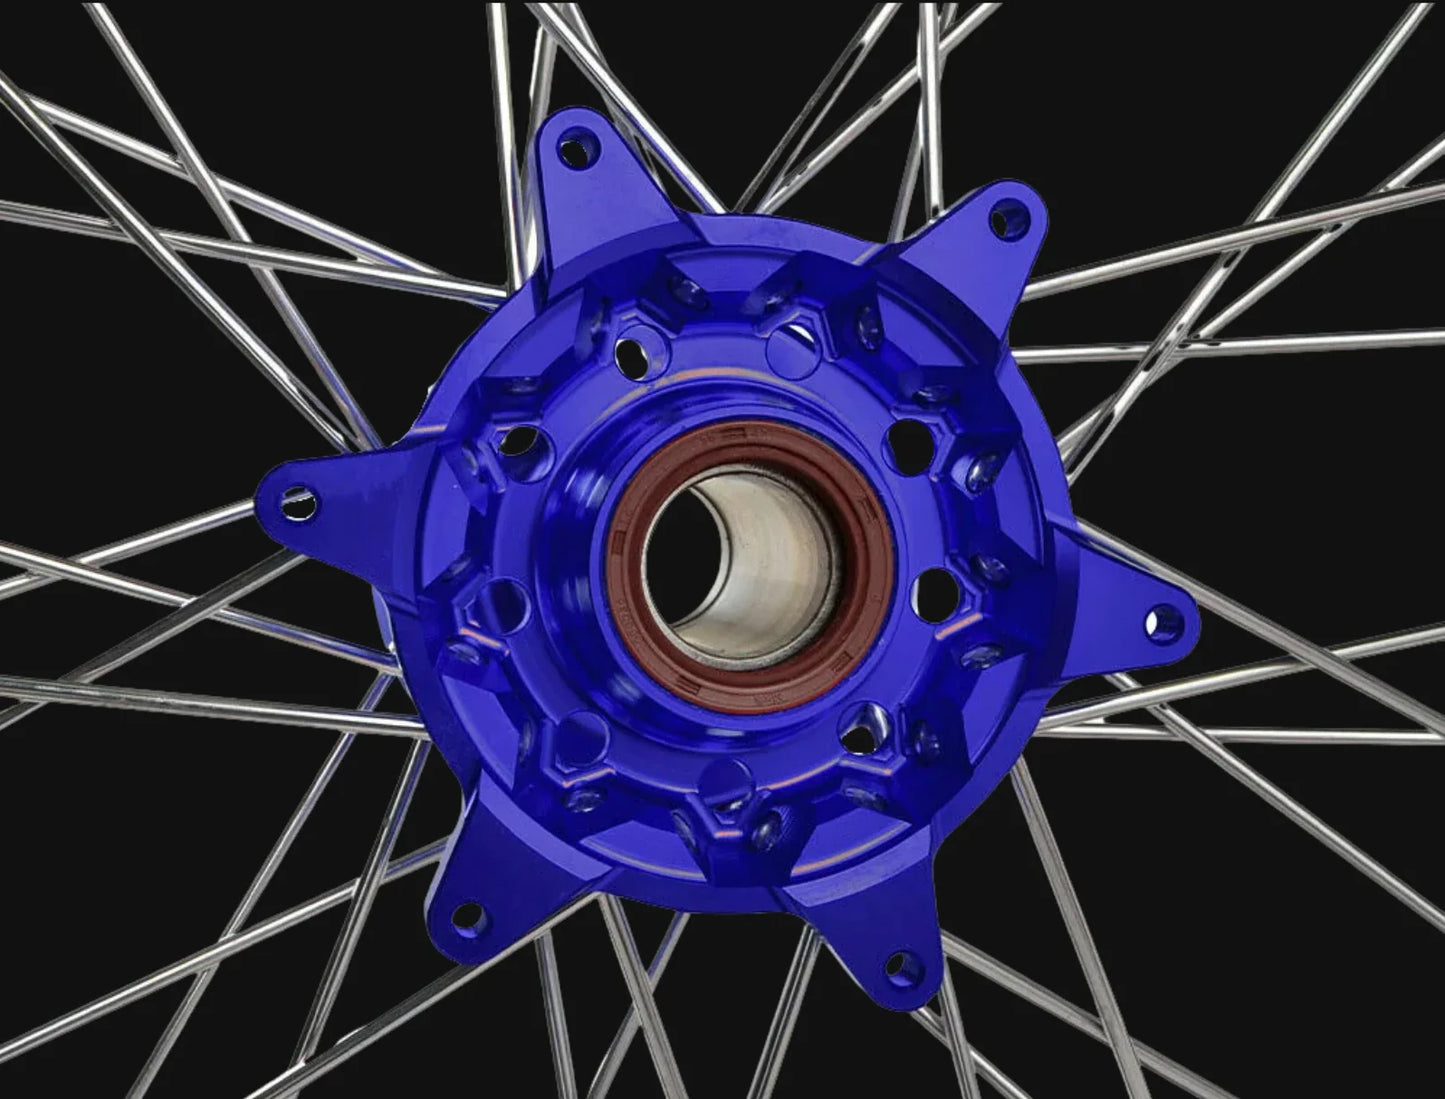 KTM / HSQ / GG WHEELSET UNISON DOT Approved 21'' & 18'' Wheel Set with bearings